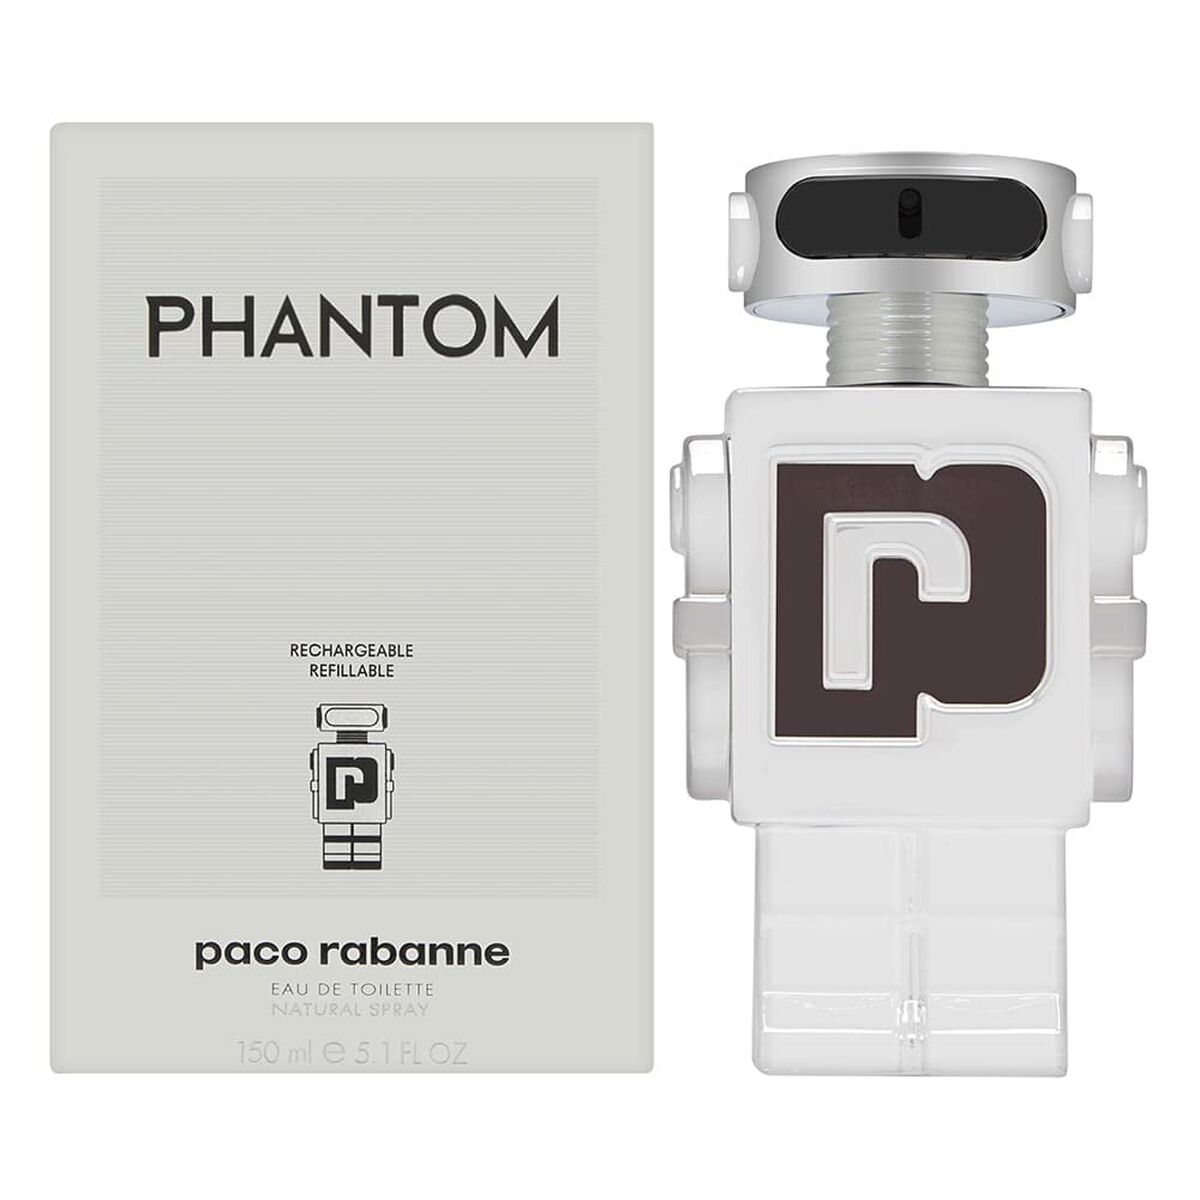 Men's Perfume Paco Rabanne EDT Phantom 150 ml-0